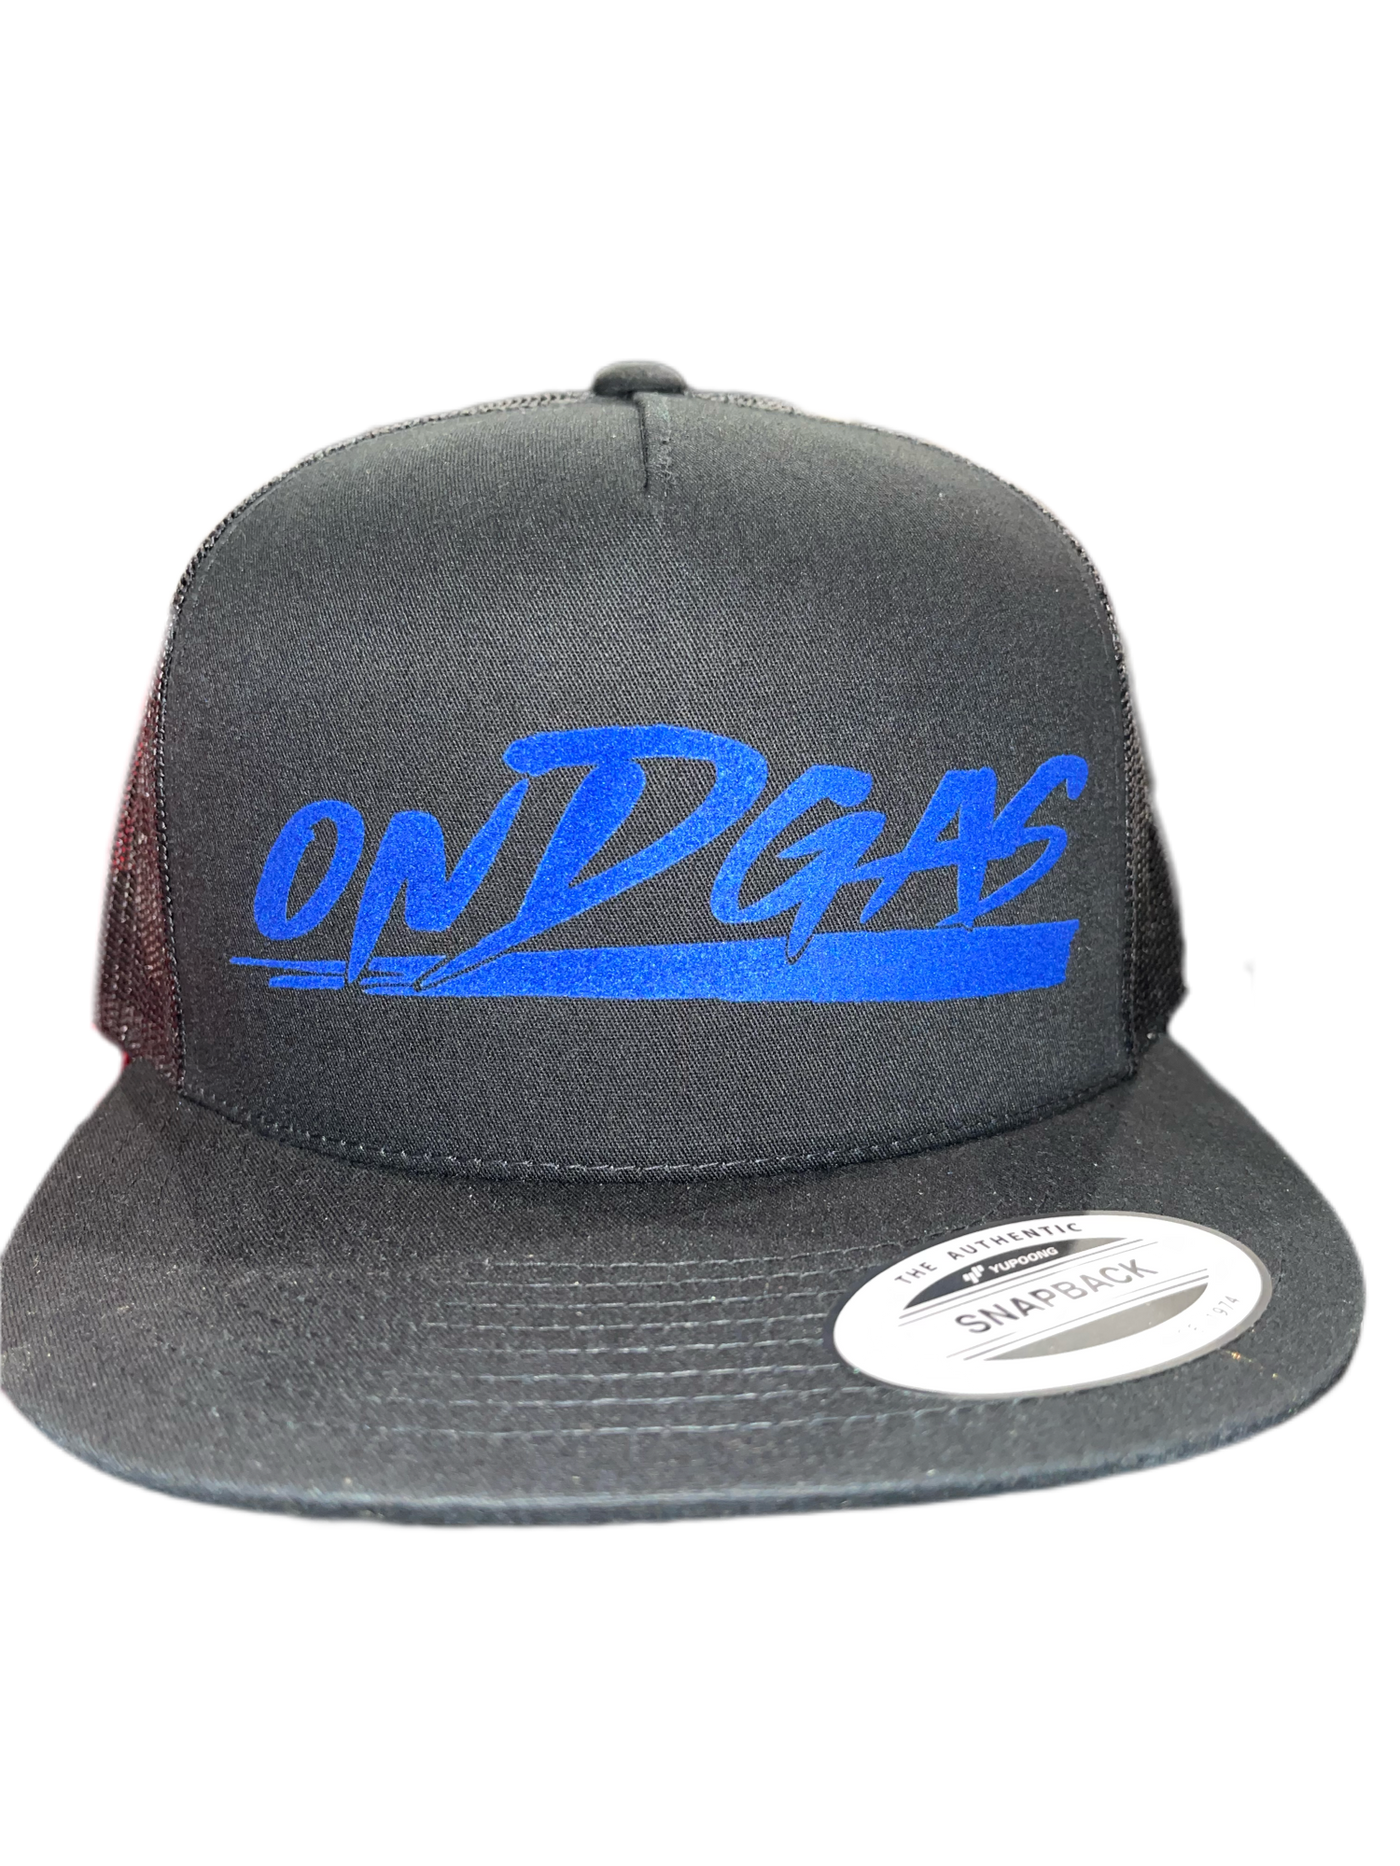 Black Hat with Blue ONDGAS logo (trucker hat)